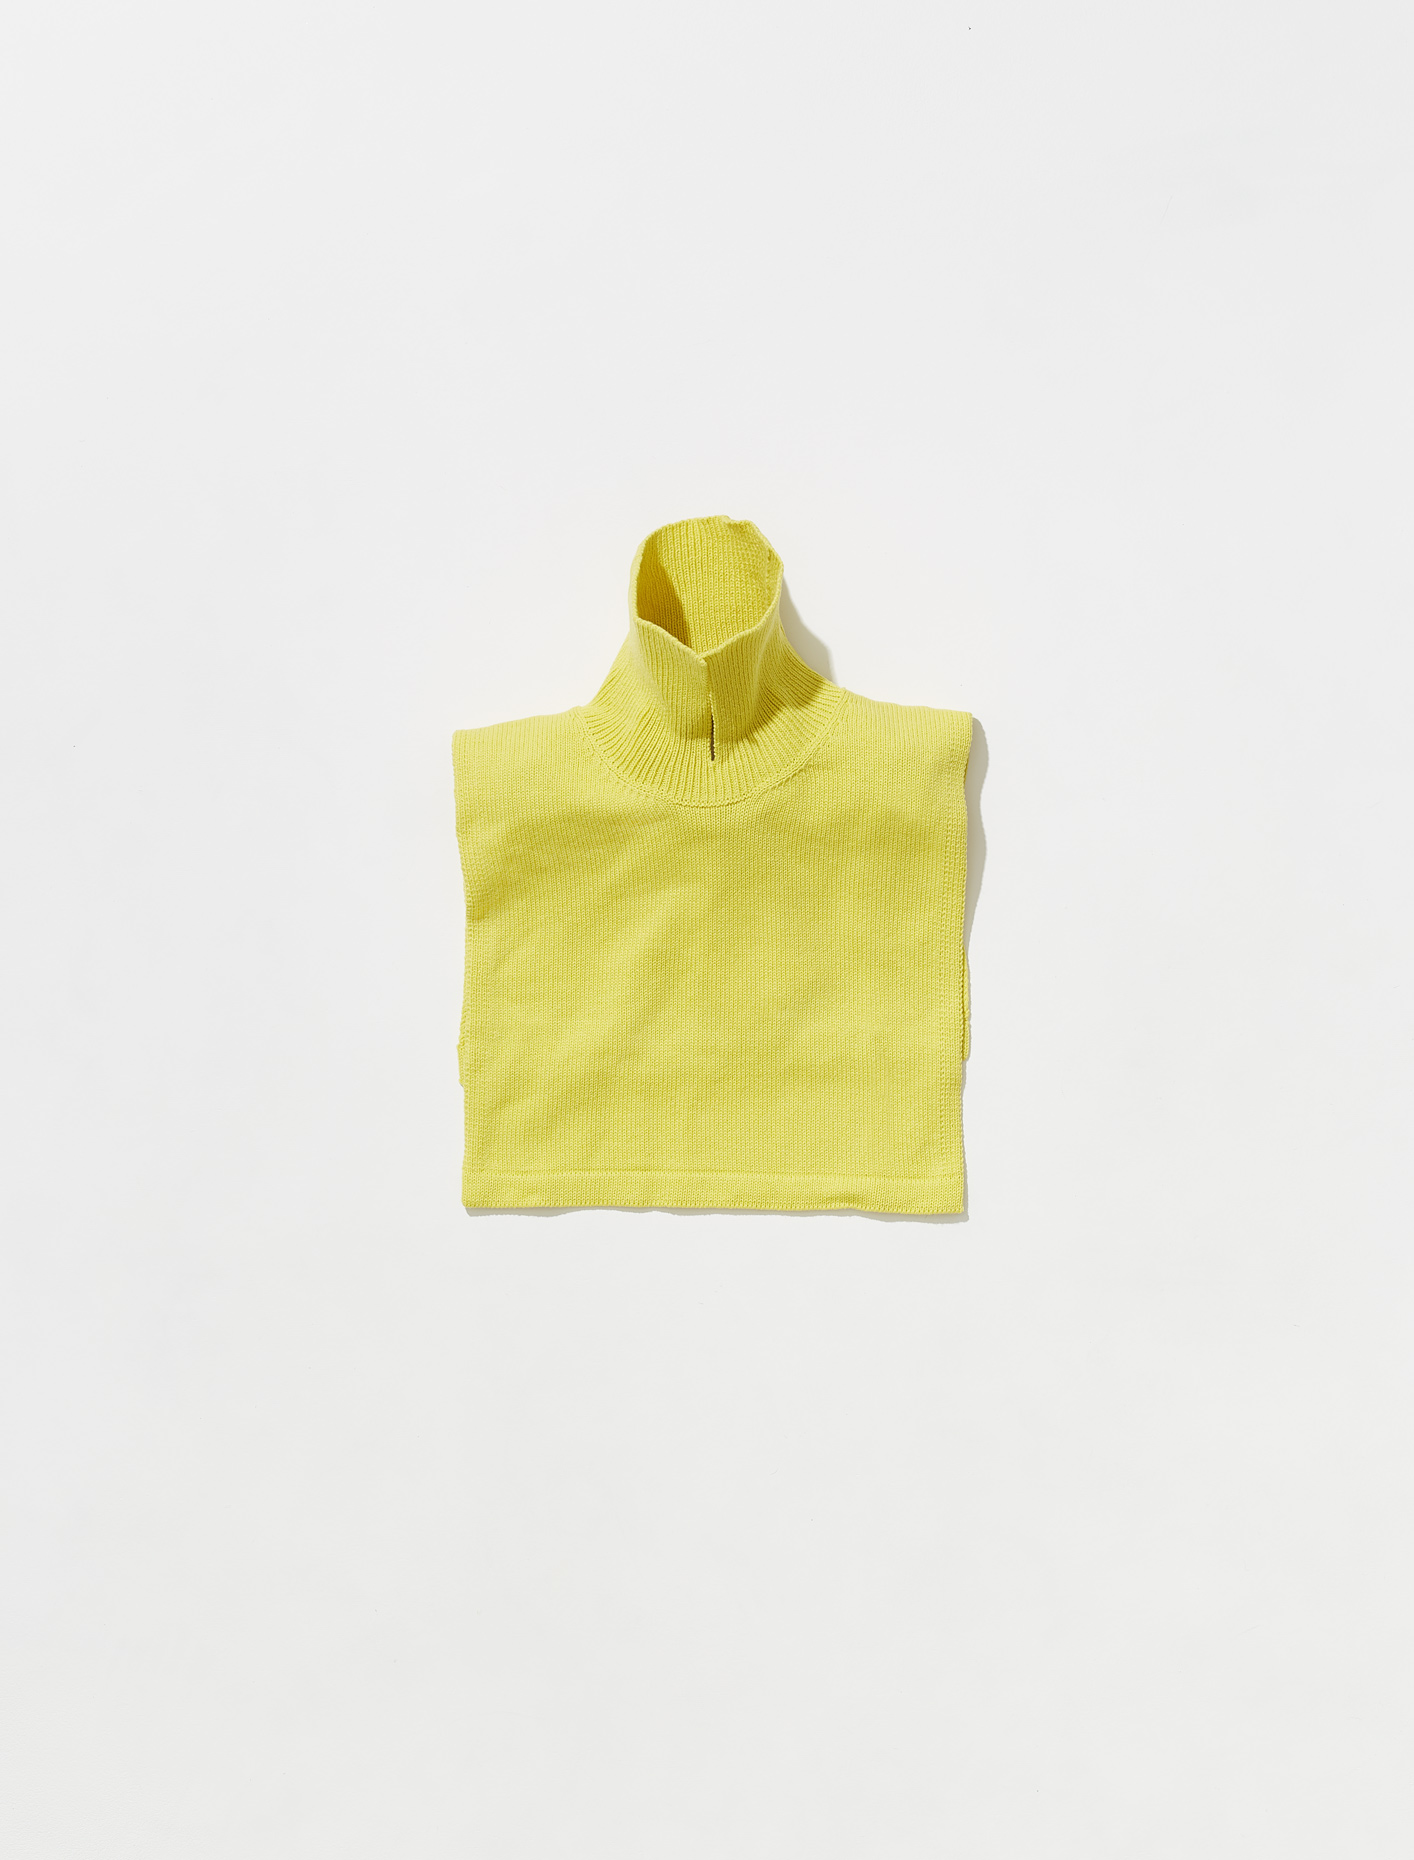 Jil Sander Bib with Collar in Bright Yellow | Voo Store Berlin ...